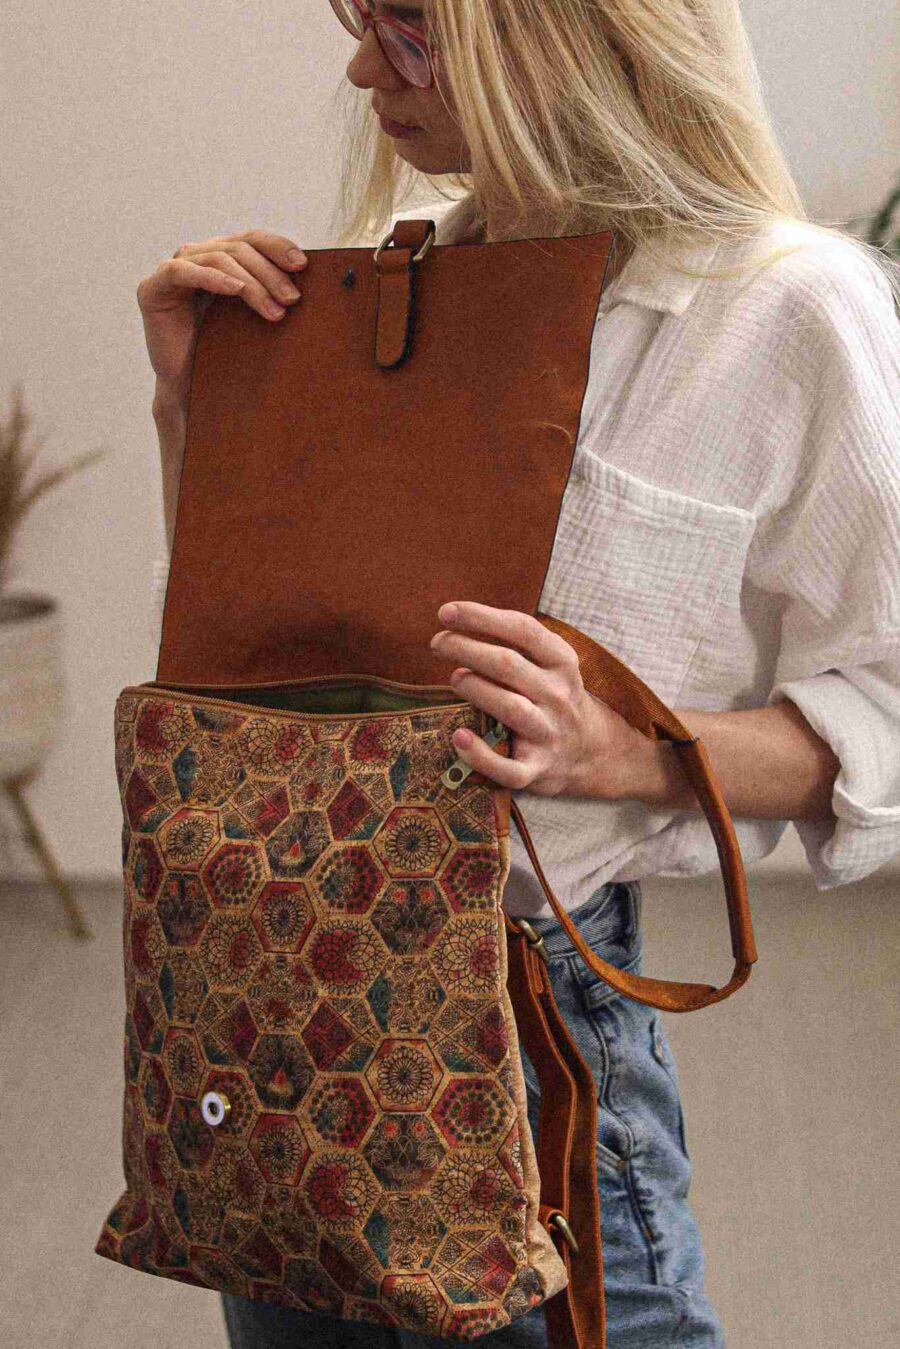 Stachys annua - korkowy plecak - torebka